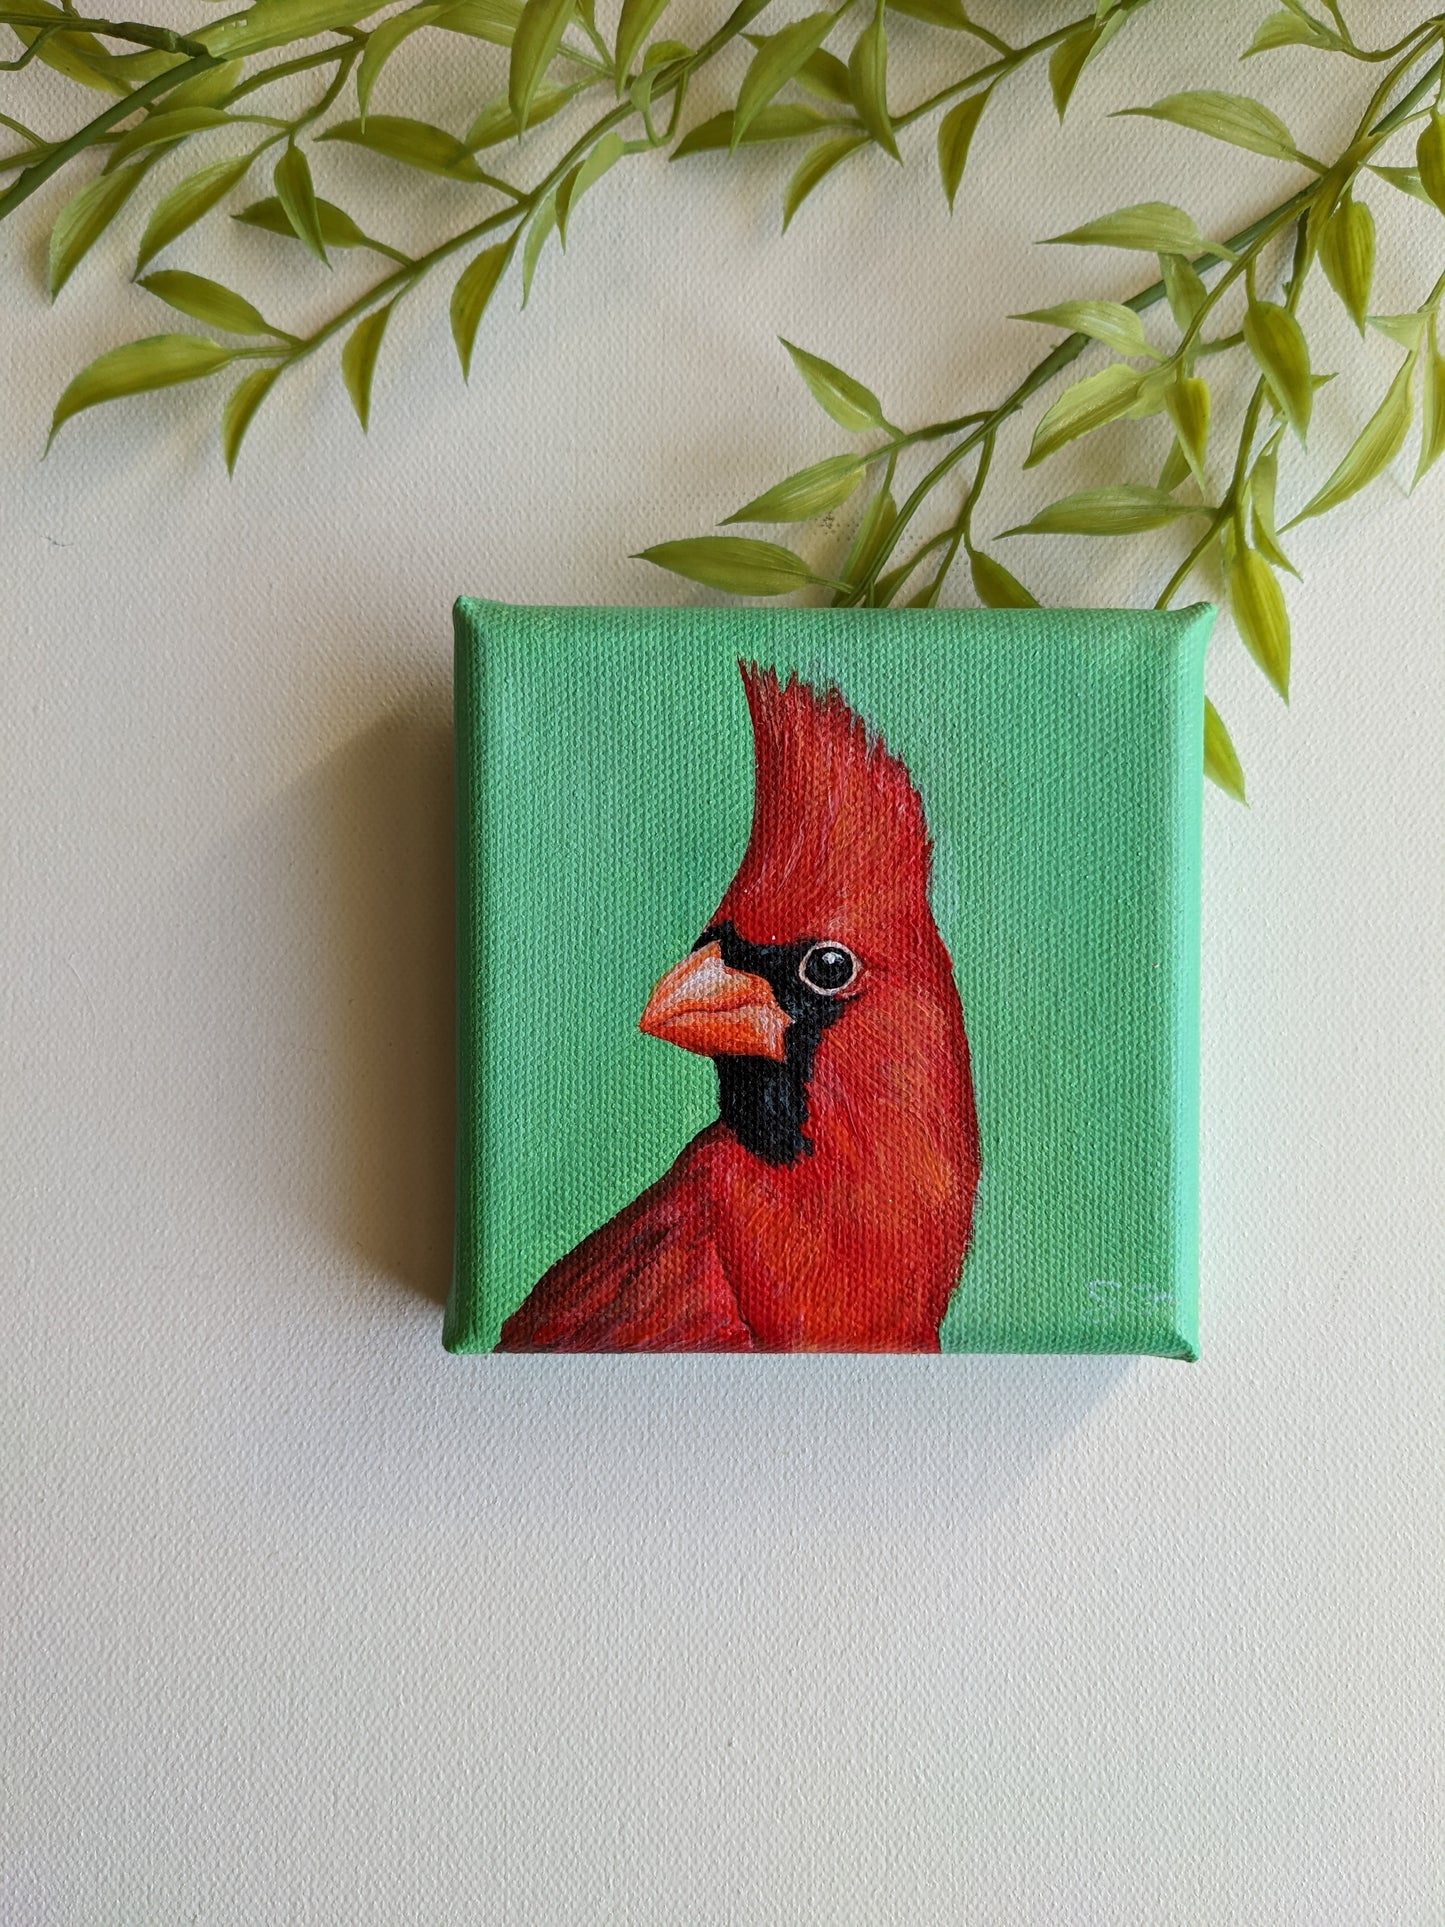 Cardinal mini original painting | 4X4 inch